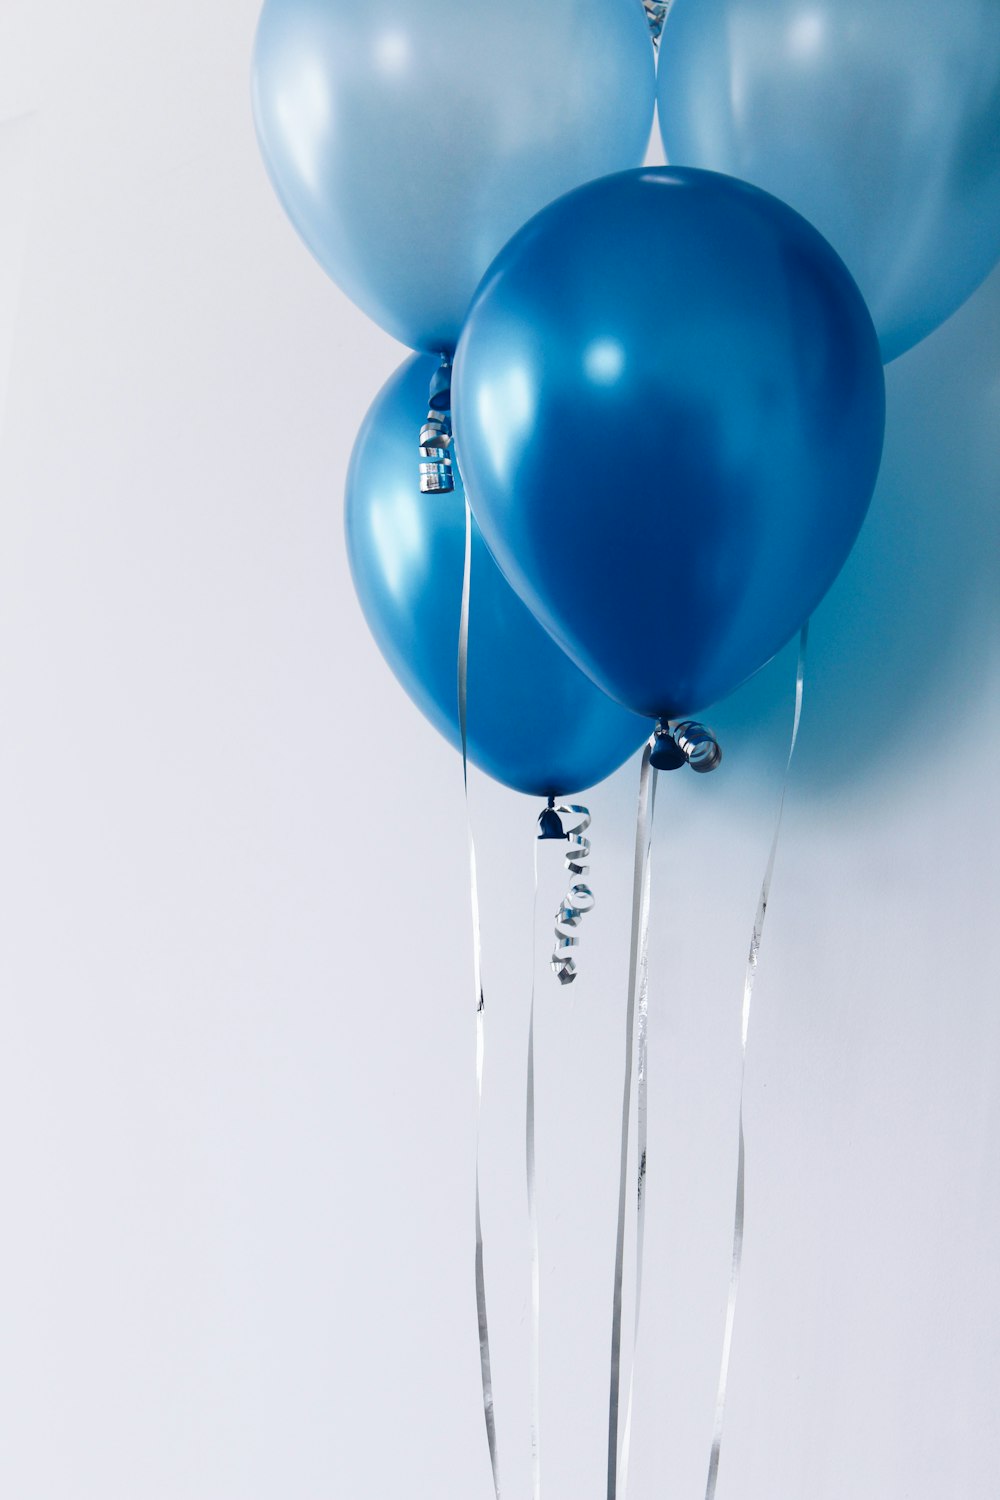 four blue balloons near white wall